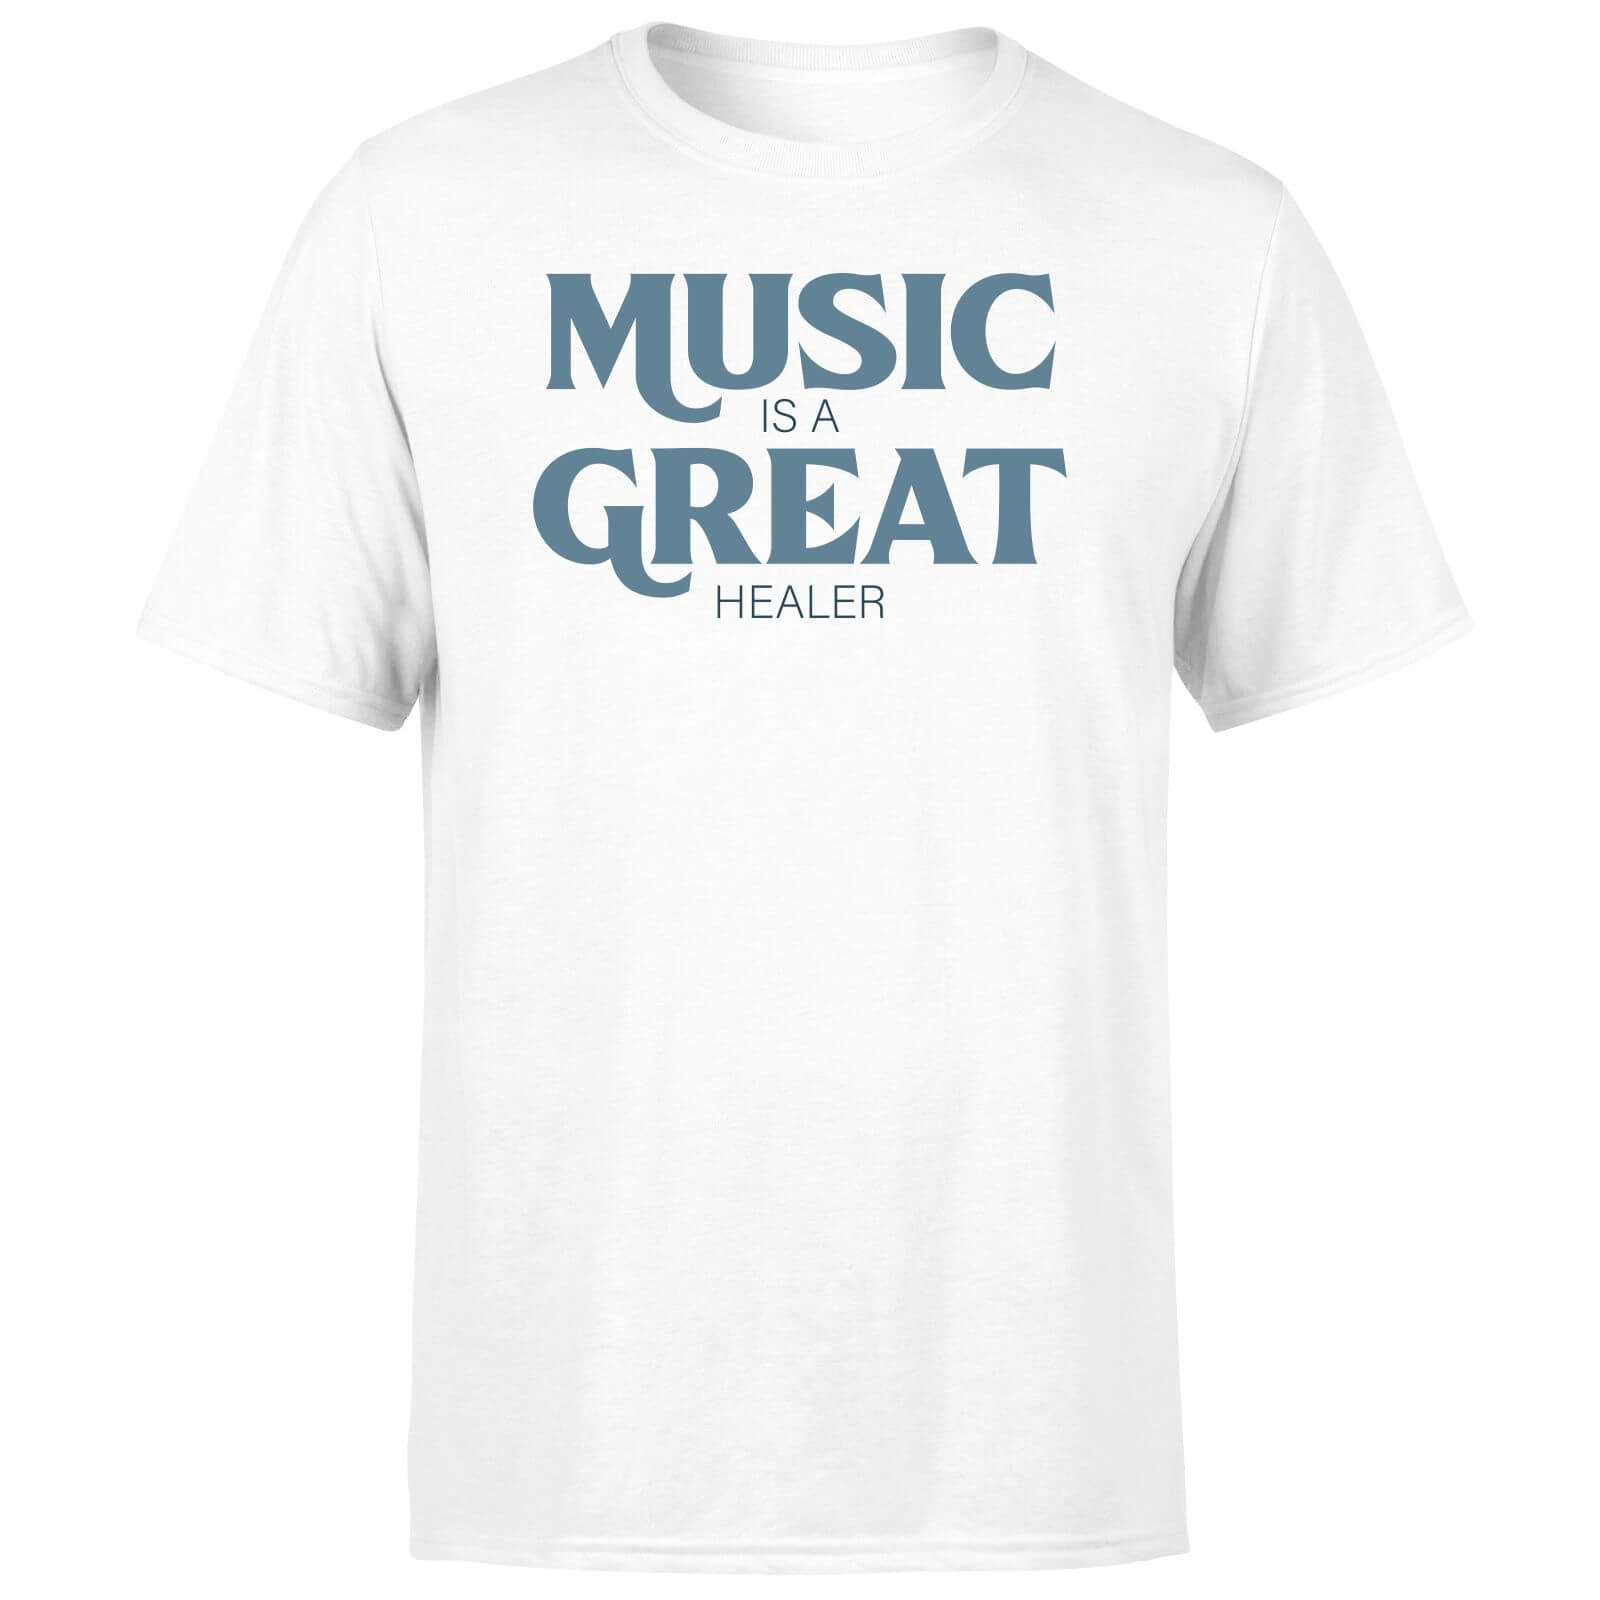 Music Is A Great Healer Men's T-Shirt - White - XS - White